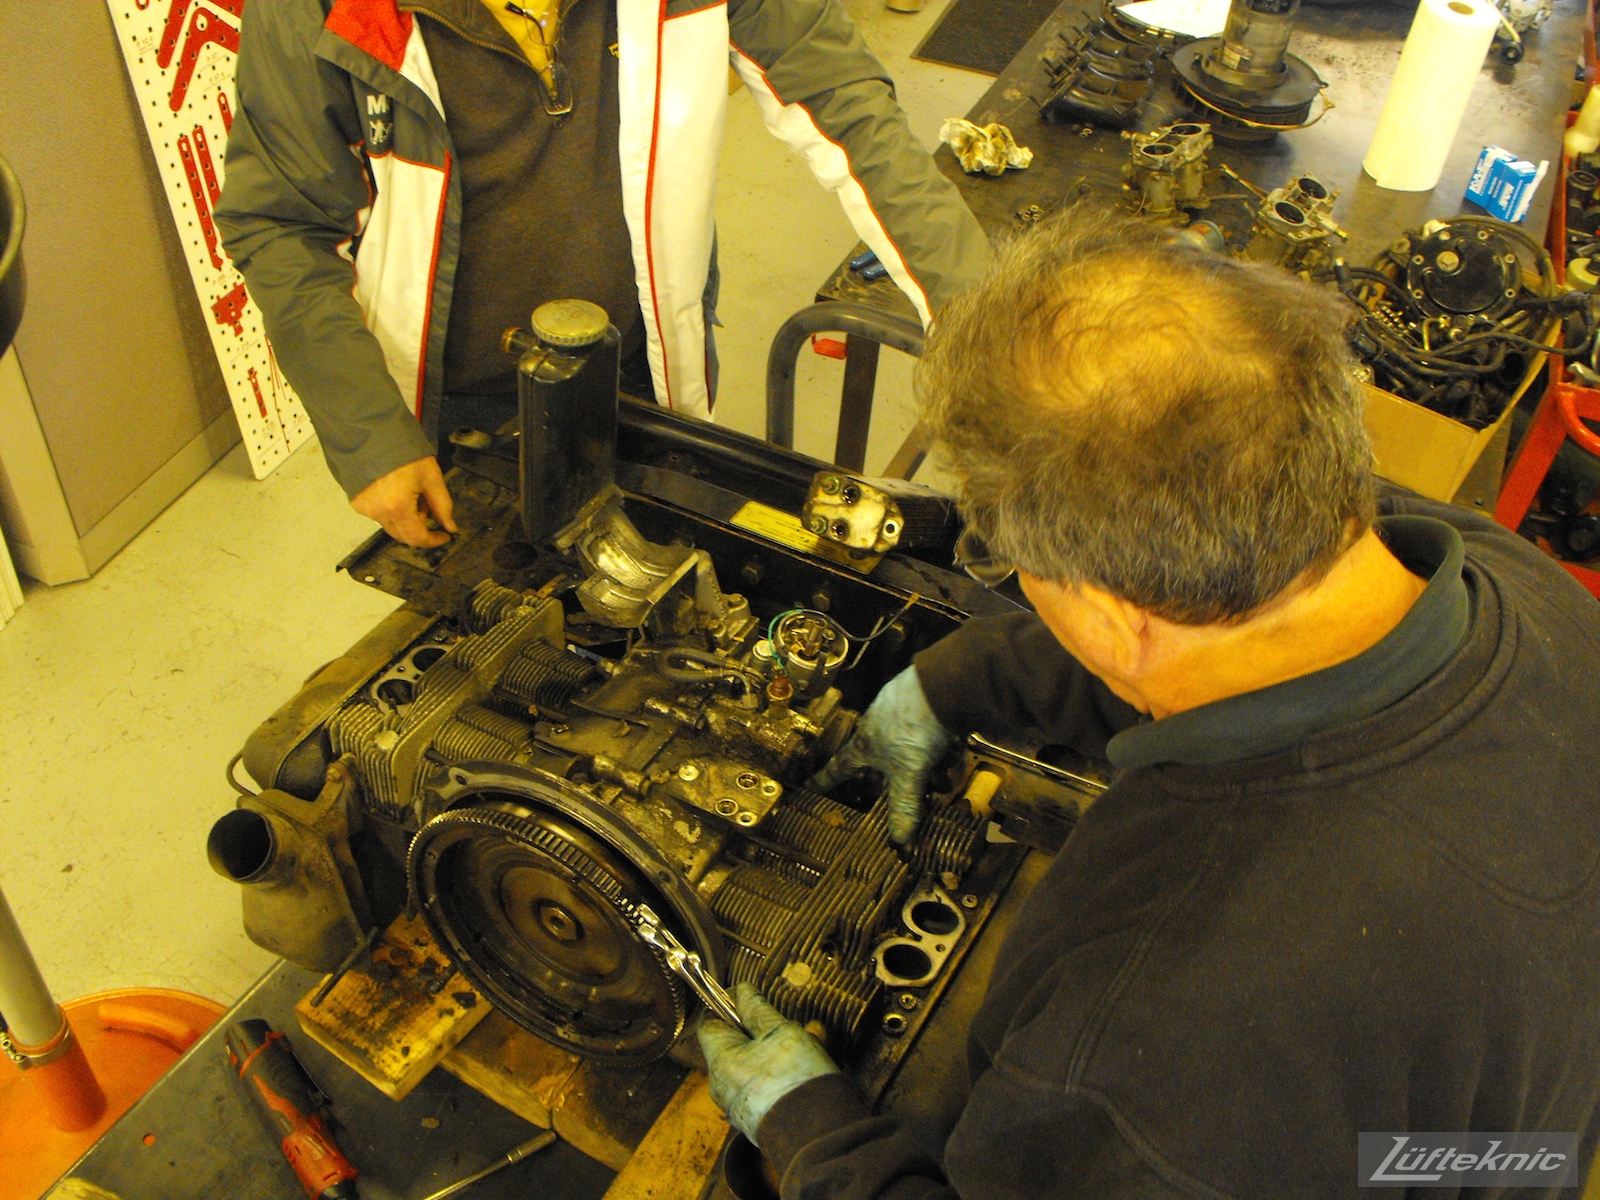 Engine disassembly begins on an Irish Green Porsche 912 undergoing restoration at Lufteknic.